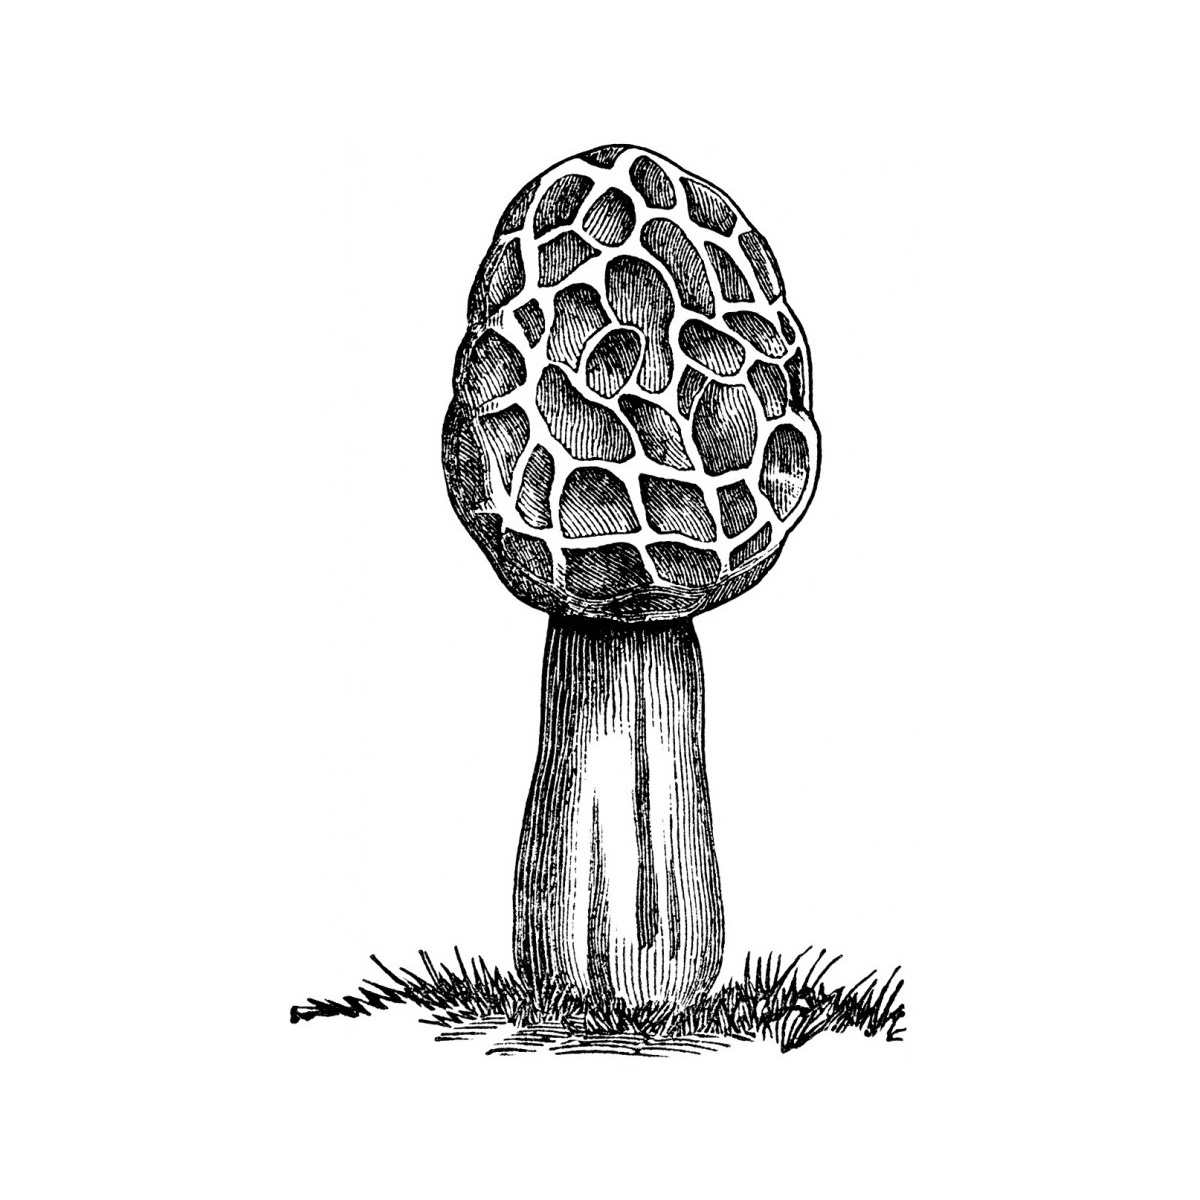 Morel mushroom (credit: OldDesignShop.com)